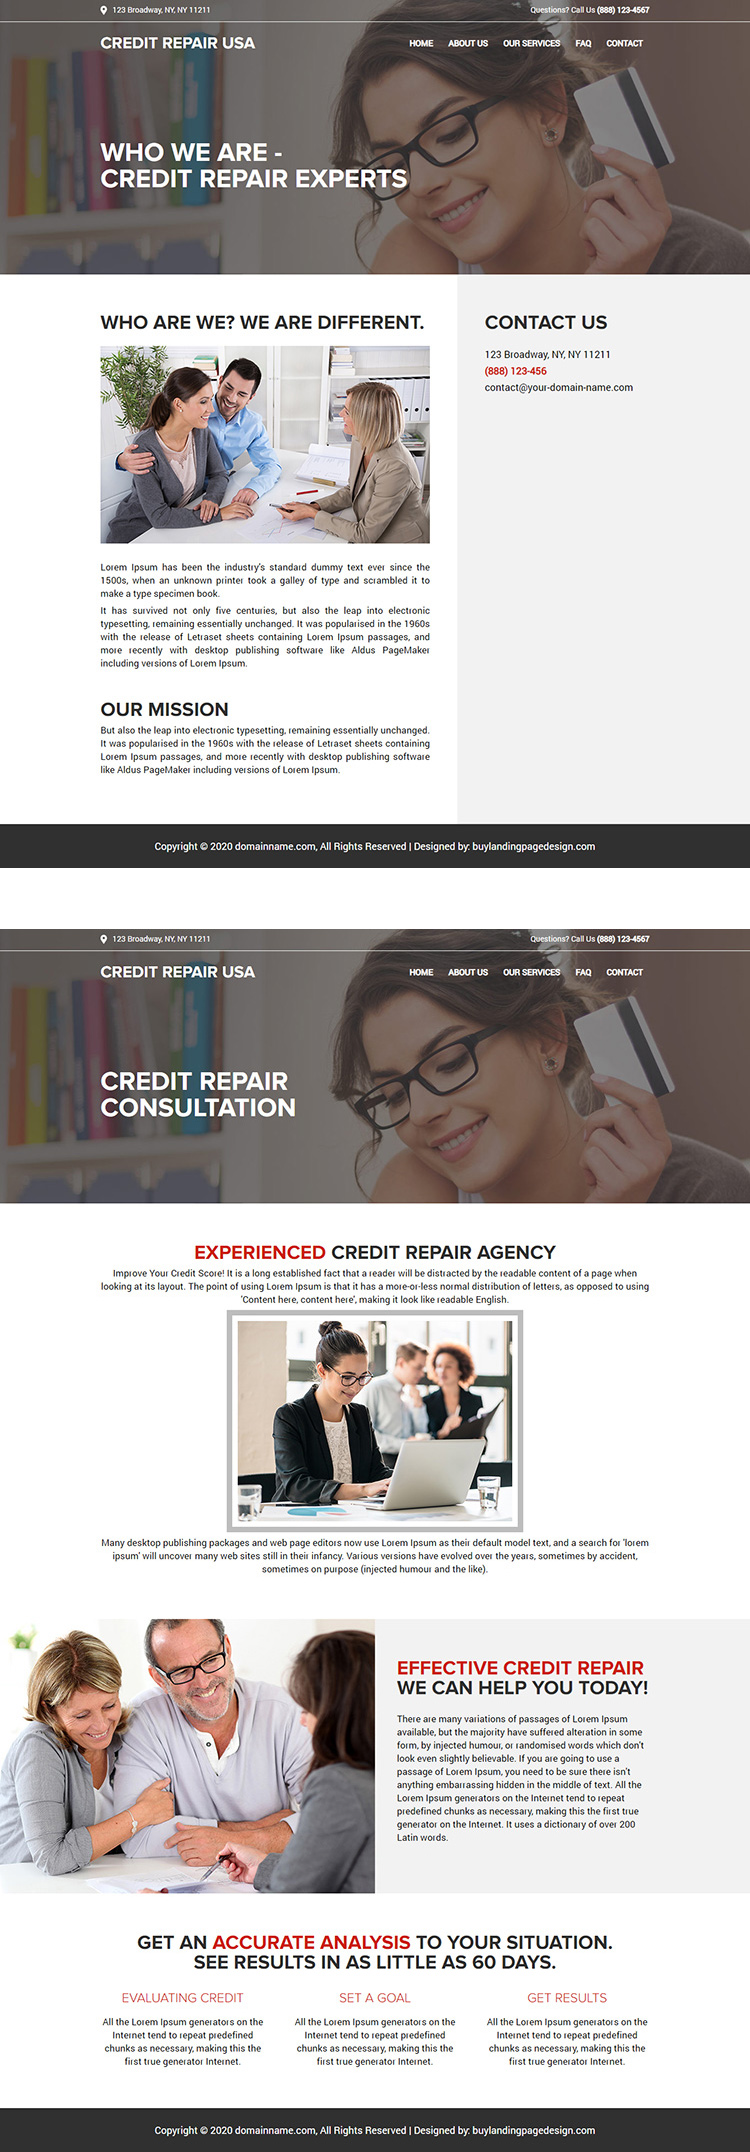 fast and easy credit repair service responsive website design